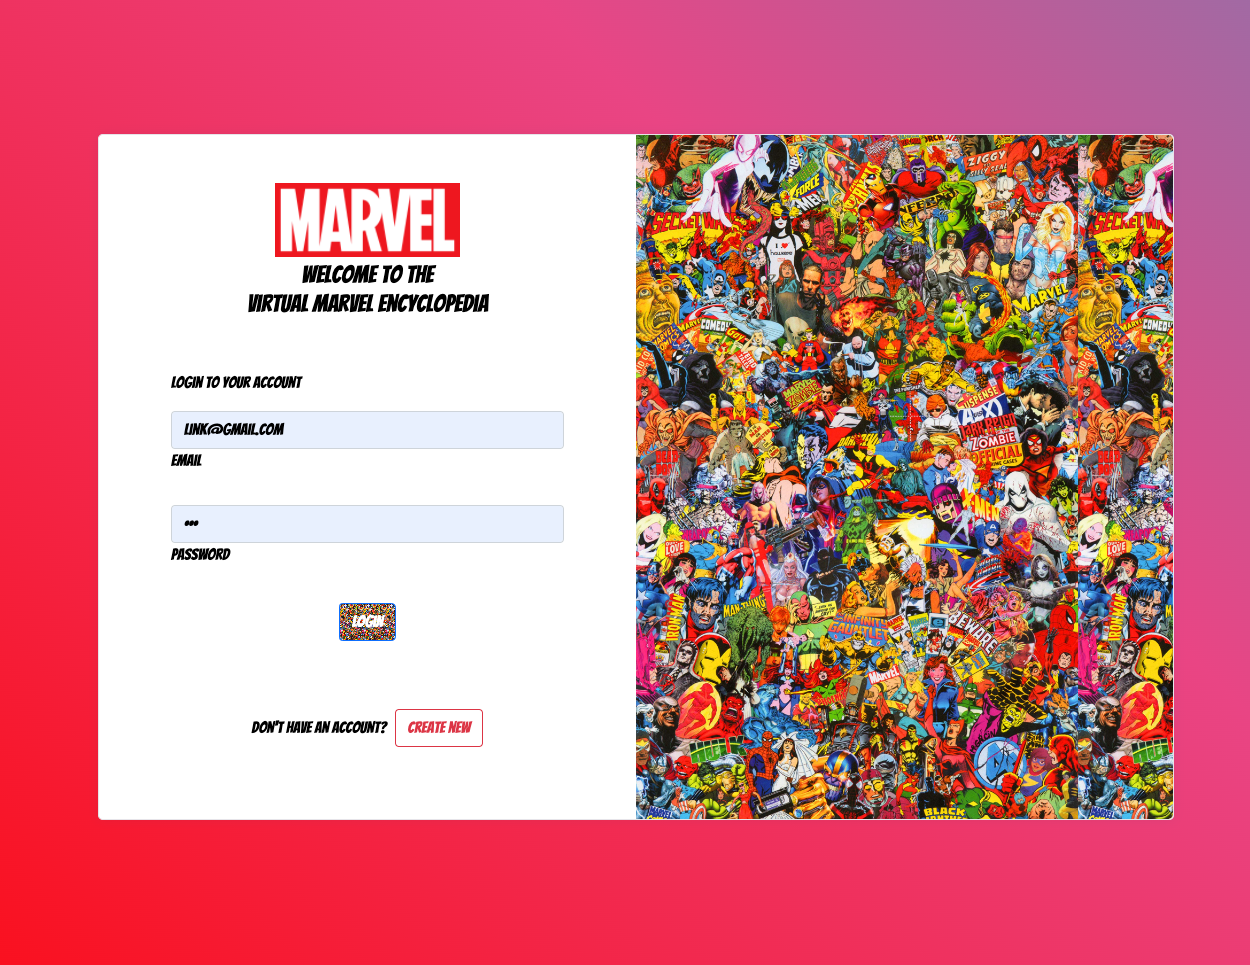 Virtual Marvel Encyclopedia sign in